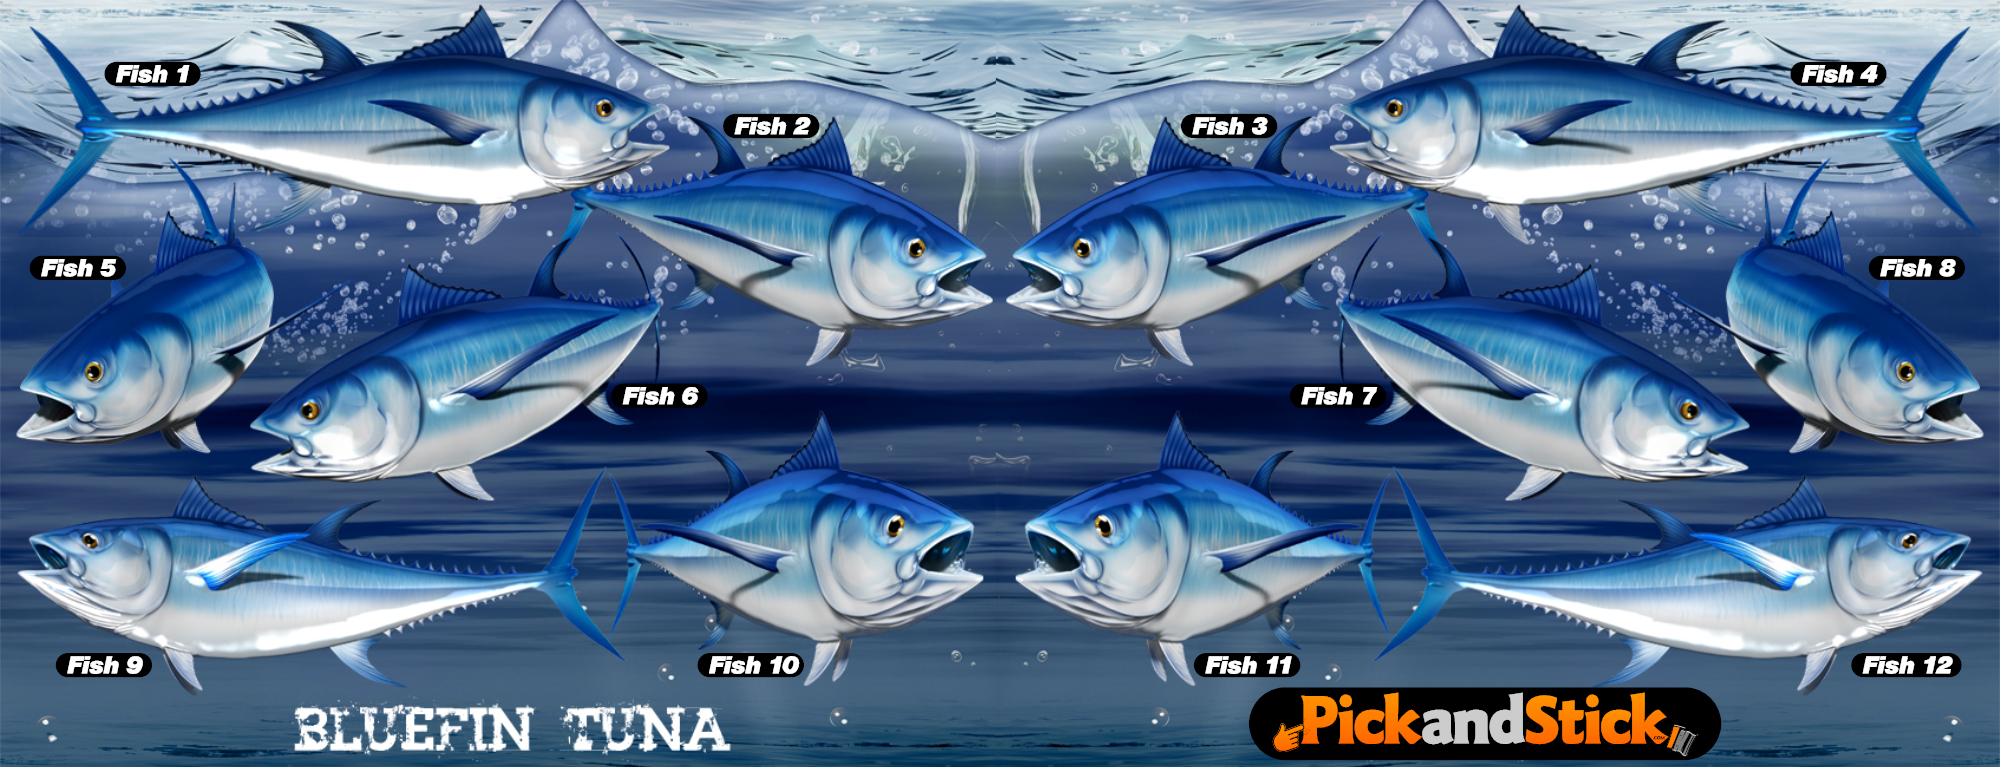 Bluefin Tuna Fish Decals - PickandStickcom